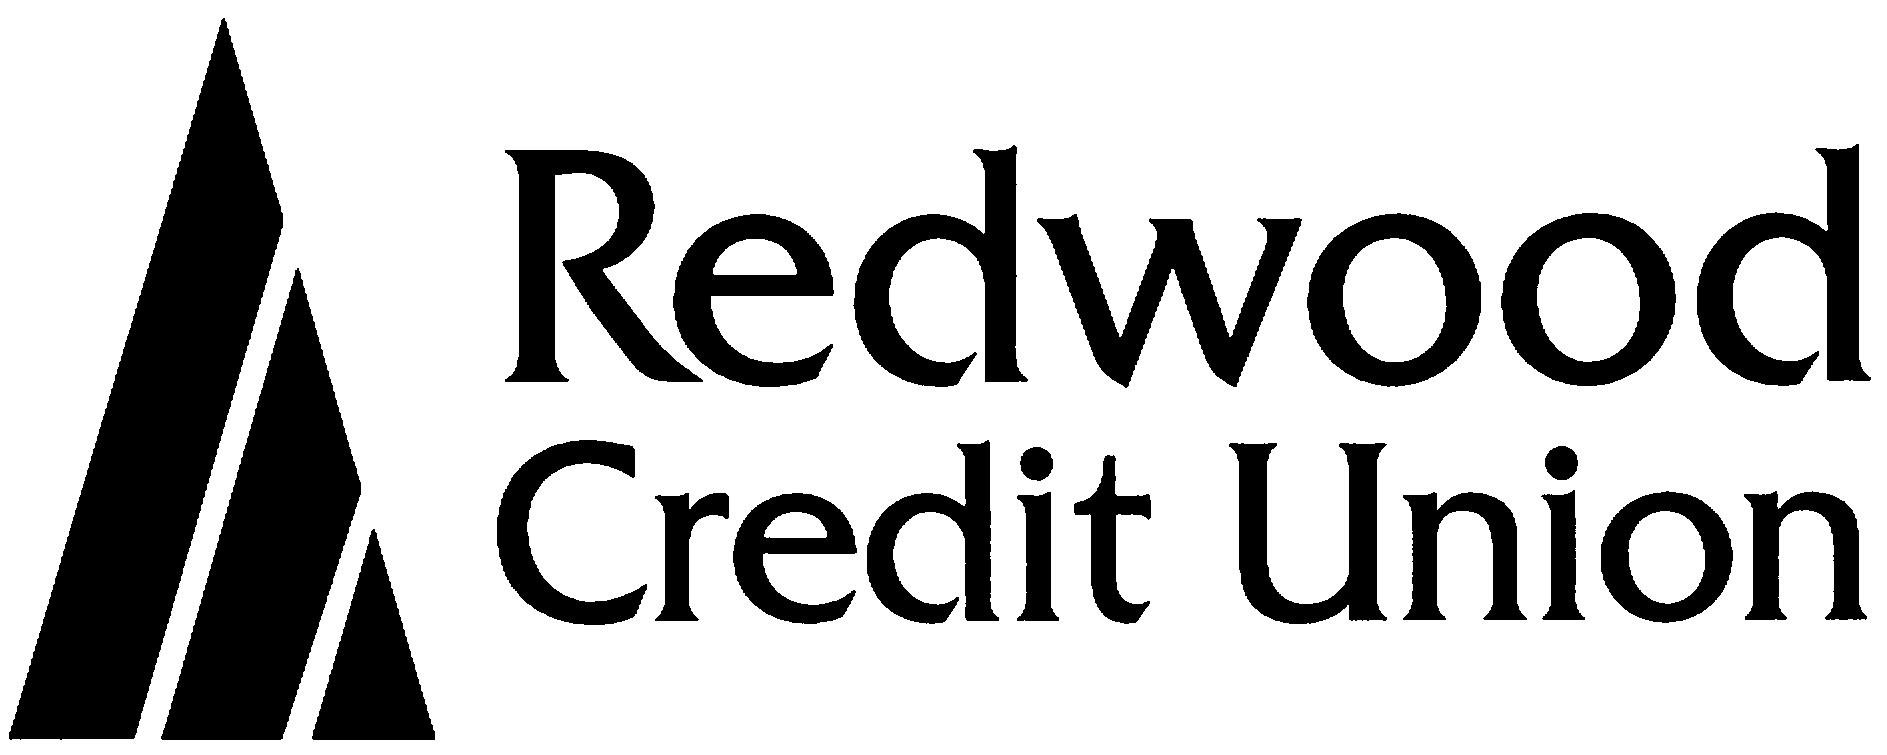 Matt Martin new VP at Redwood Credit union – The Ukiah Daily Journal